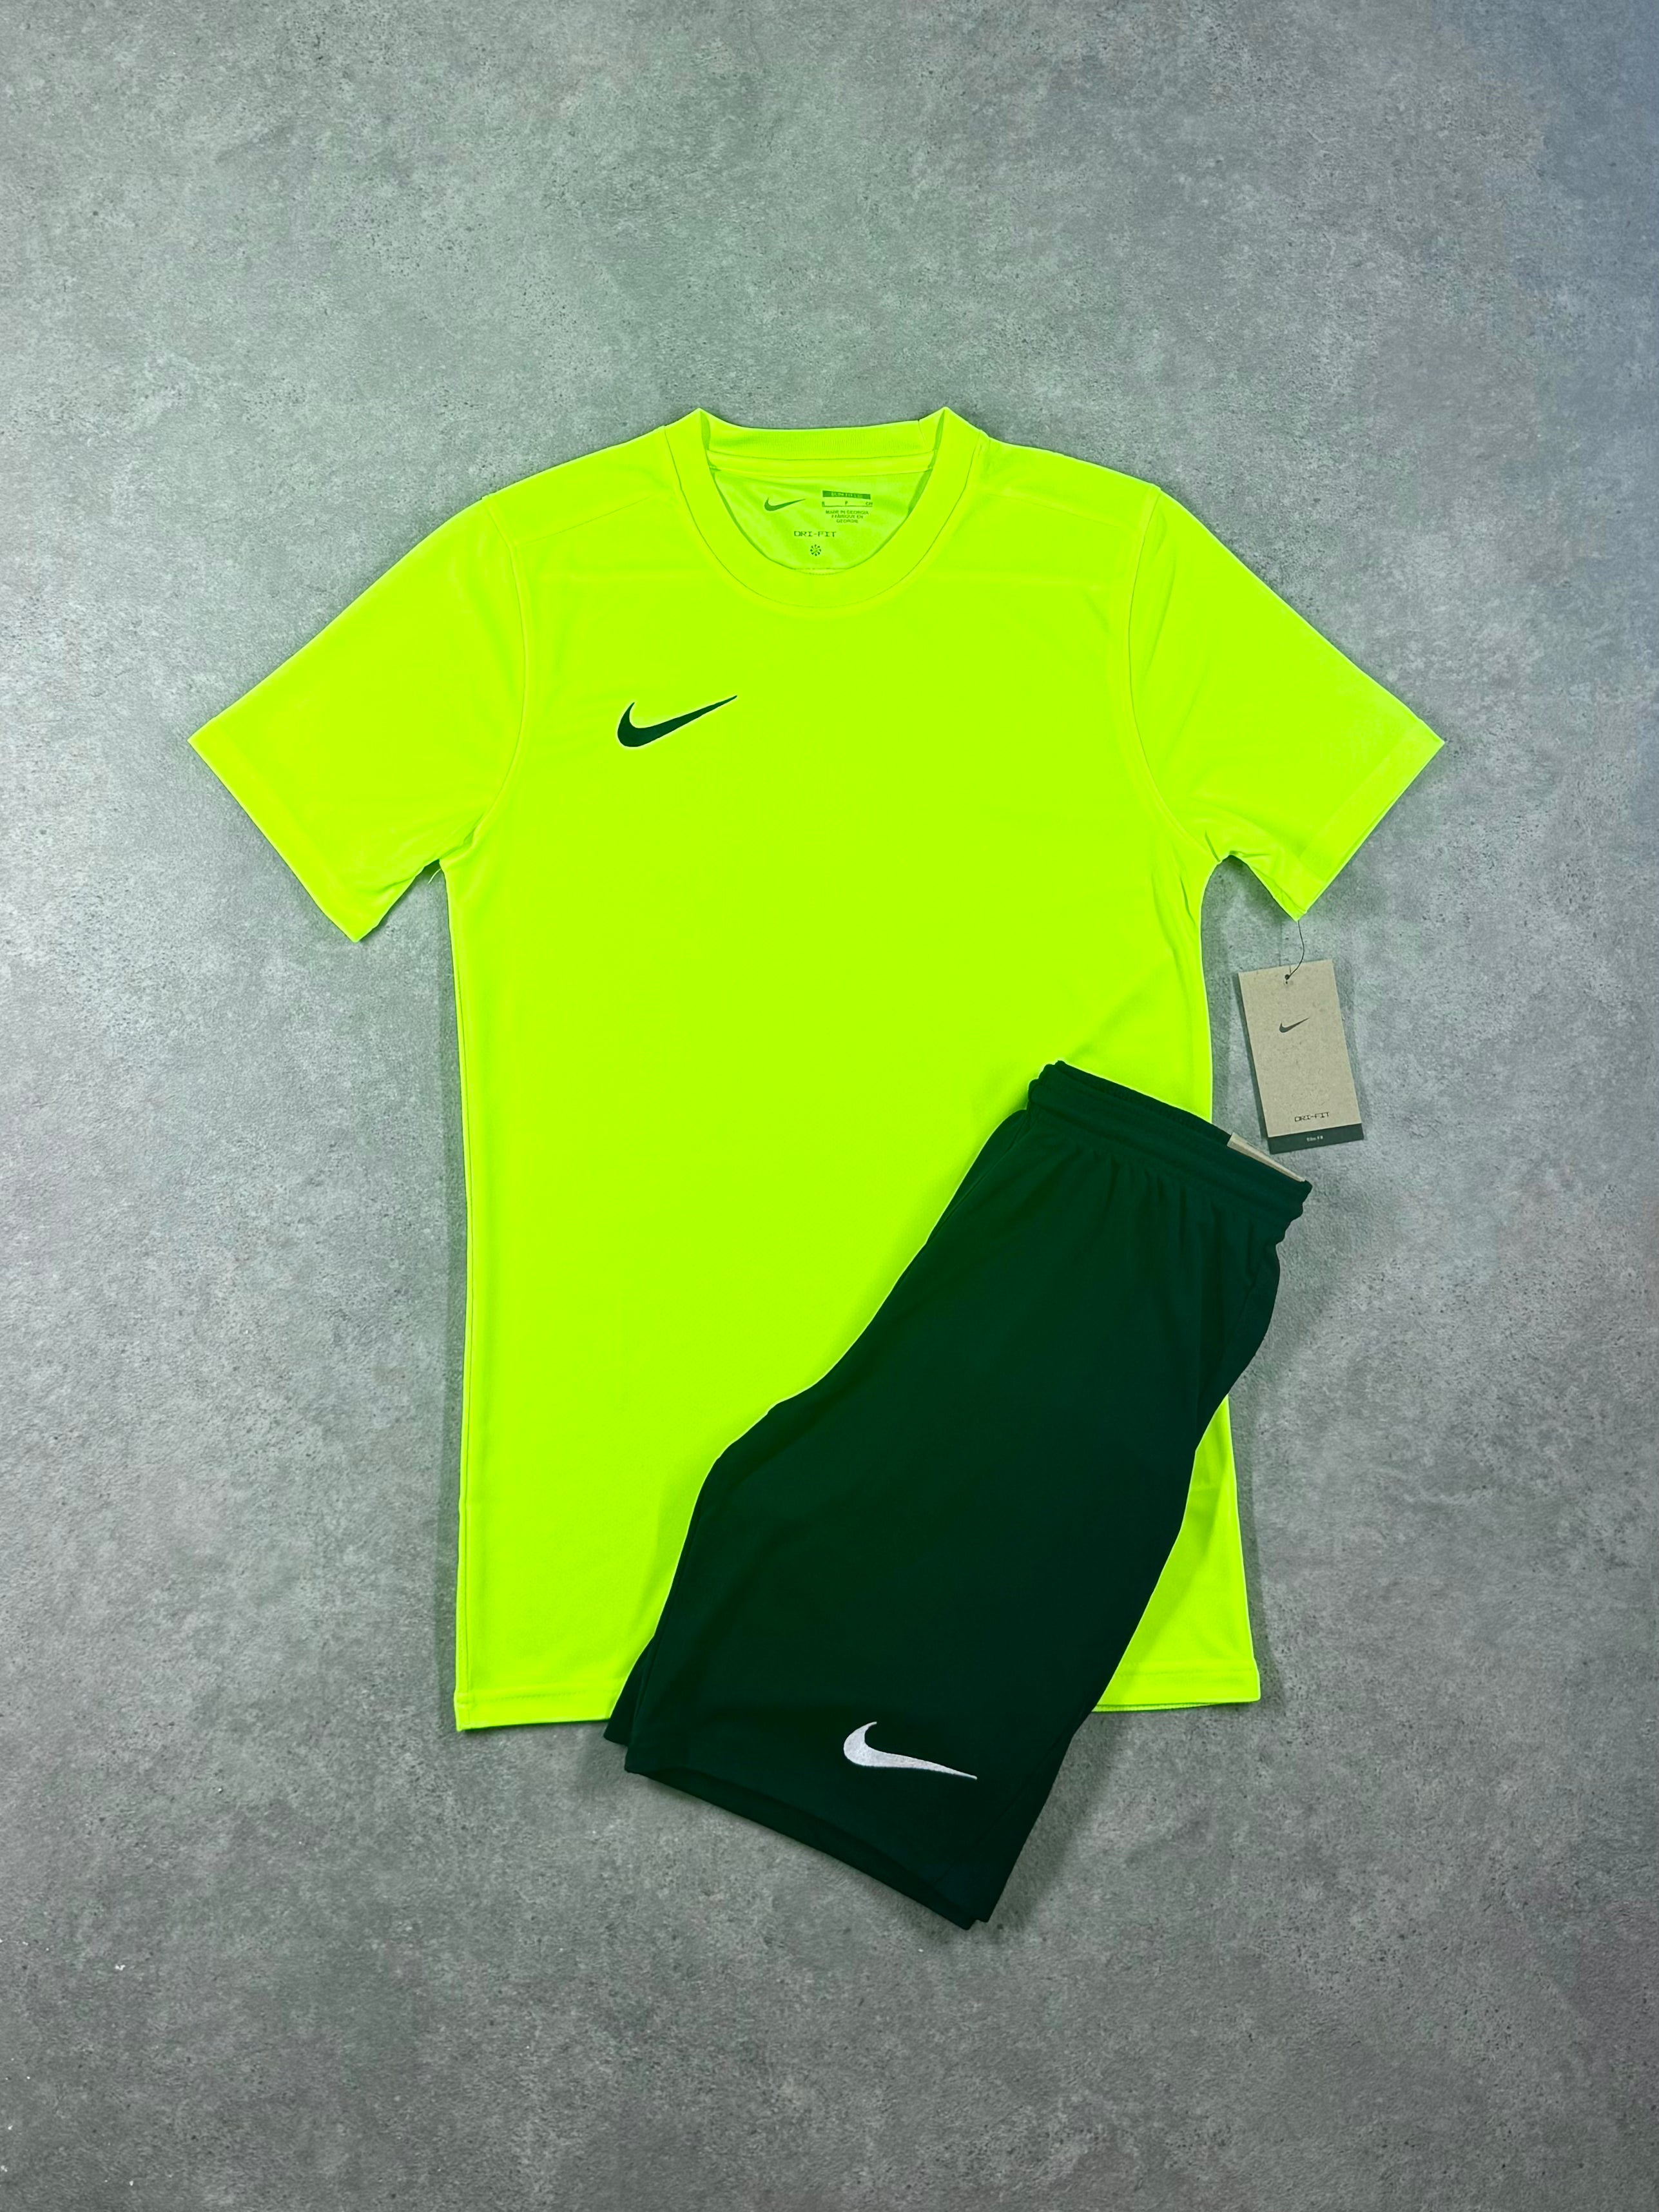 Nike - Dri Fit Set - Volt/Black